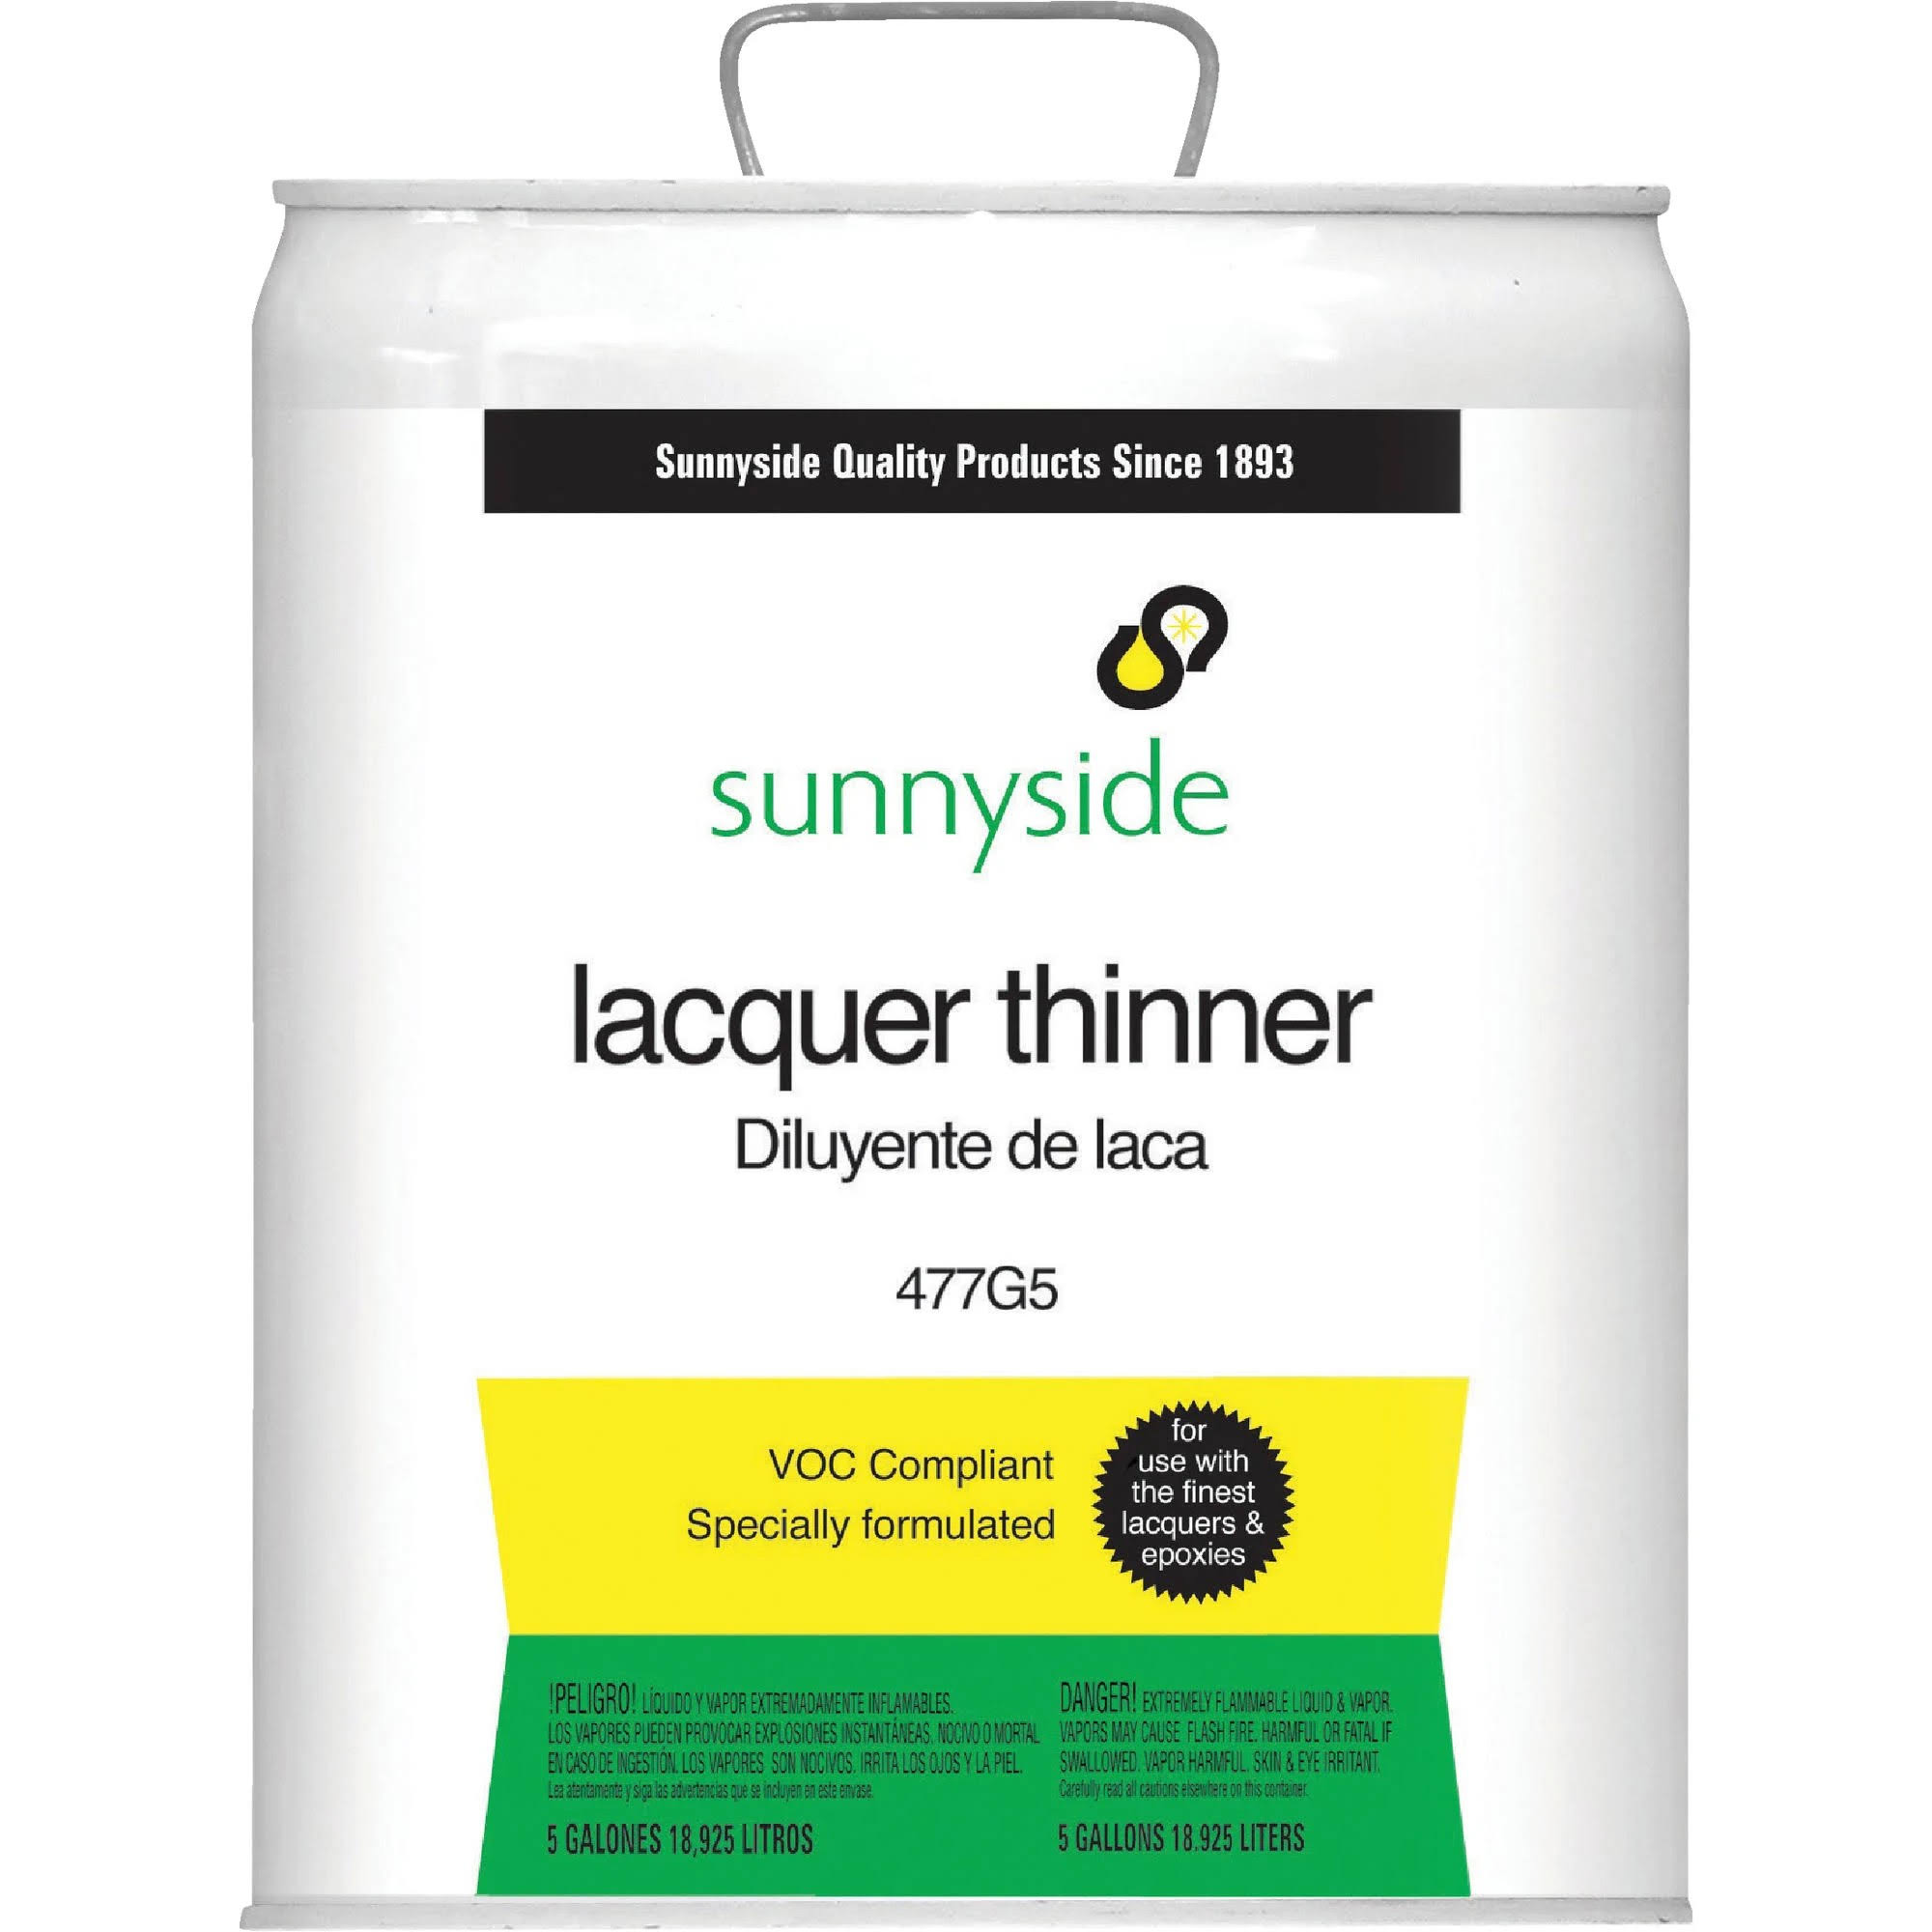 Sunnyside Low VOC Lacquer Thinner 477G5